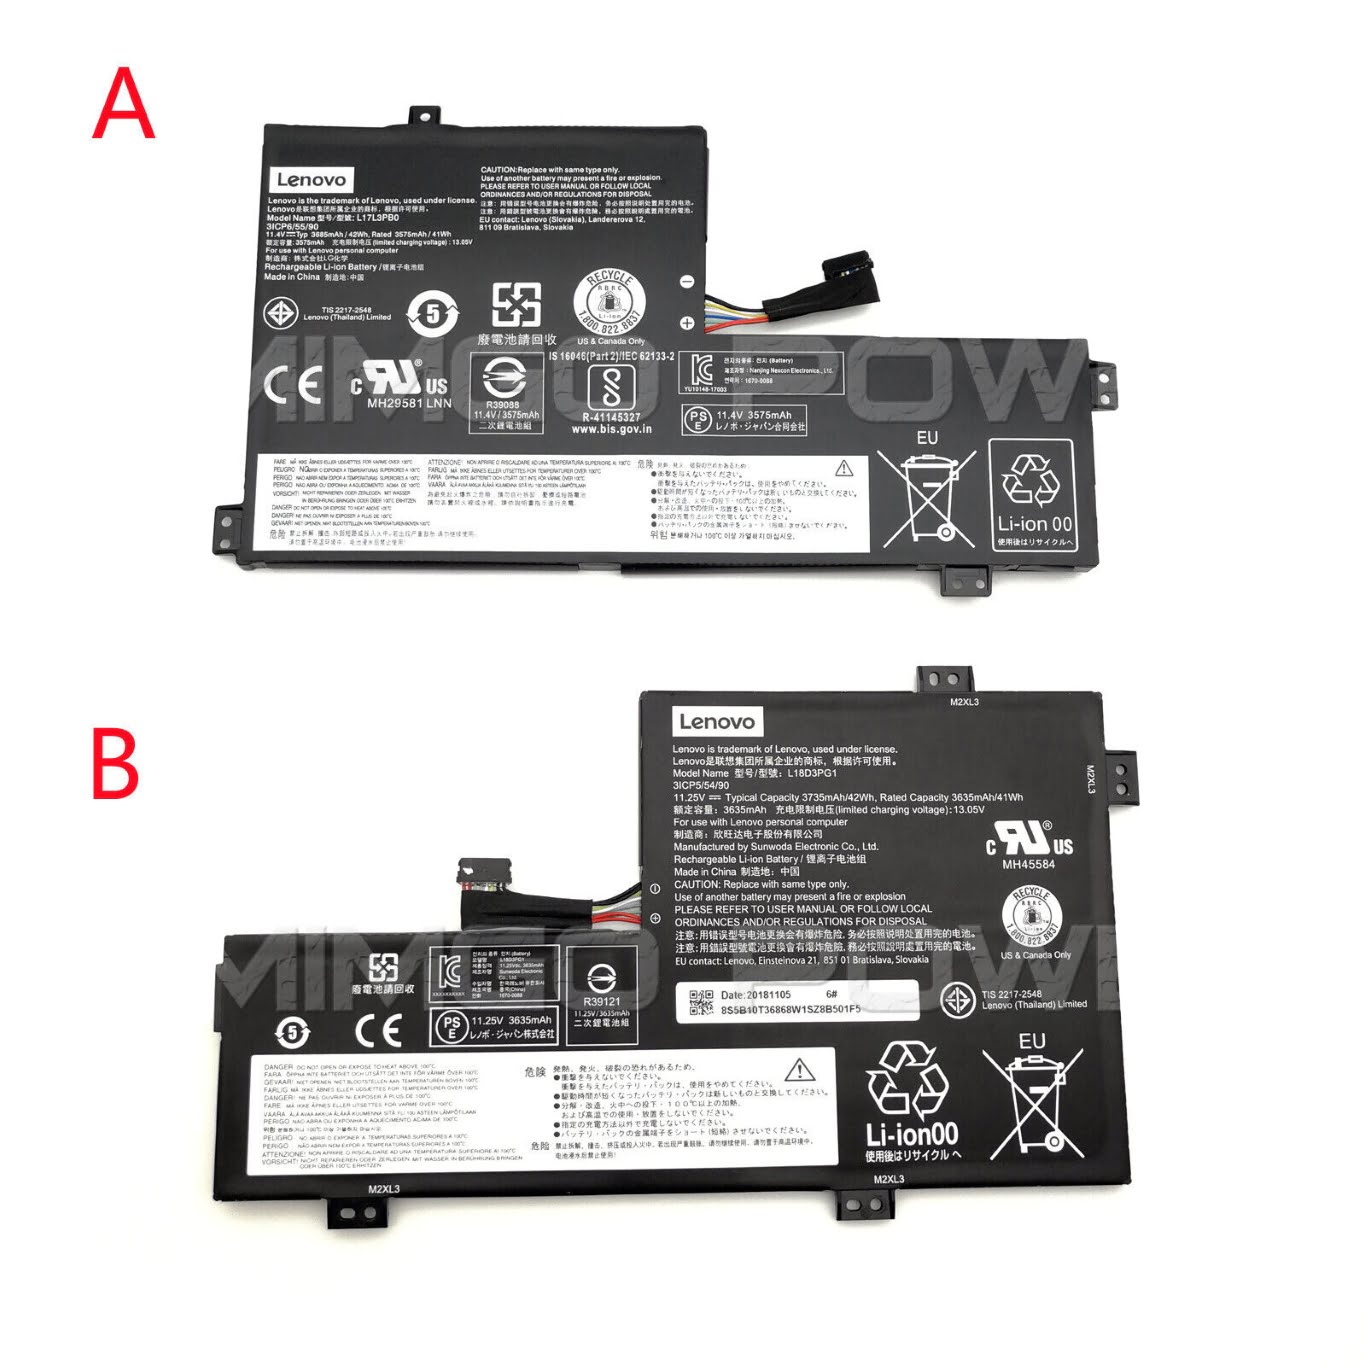 L17C3PG0, L17L3PG0 replacement Laptop Battery for Lenovo Chromebook 100E 1st Gen Series, Chromebook 100E 2nd Gen Series, 42wh, 3 cells, 11.25v / 11.4v